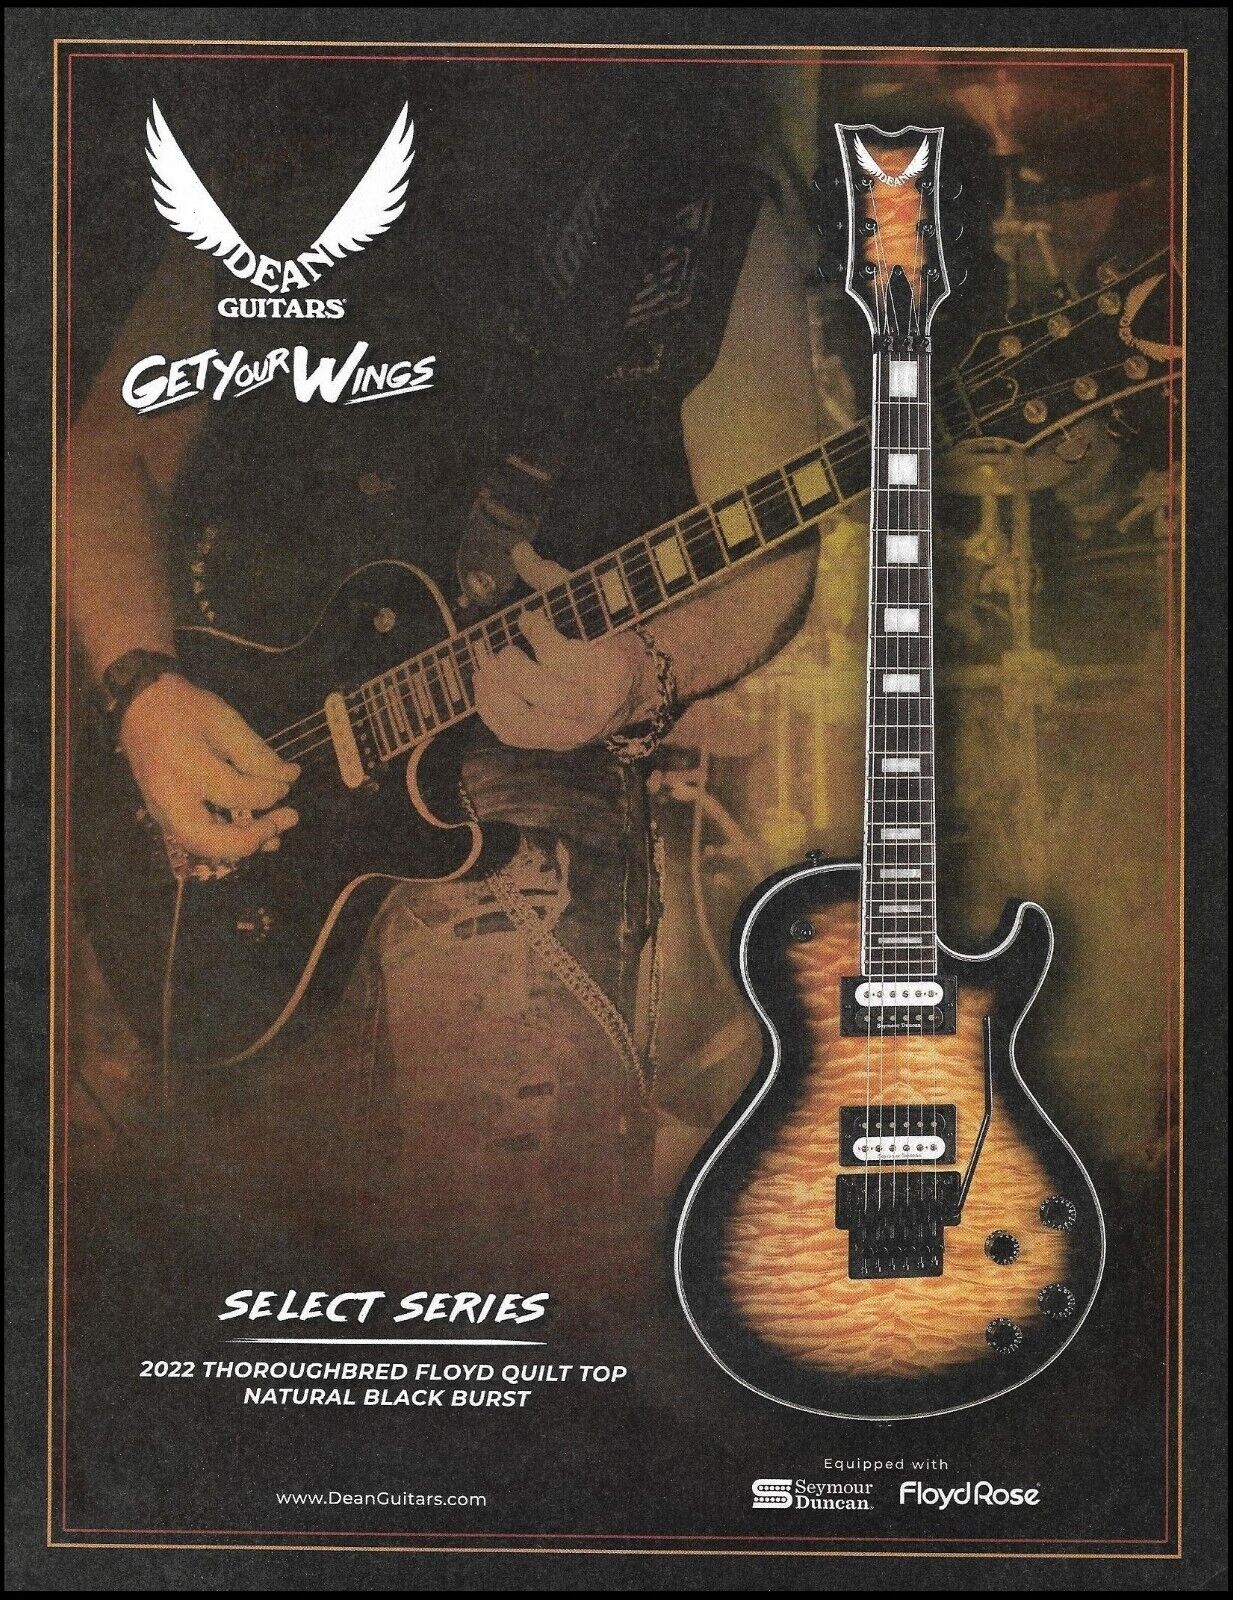 2022 Dean Thoroughbred Floyd Select Series guitar advertisement 8 x 11 ad print